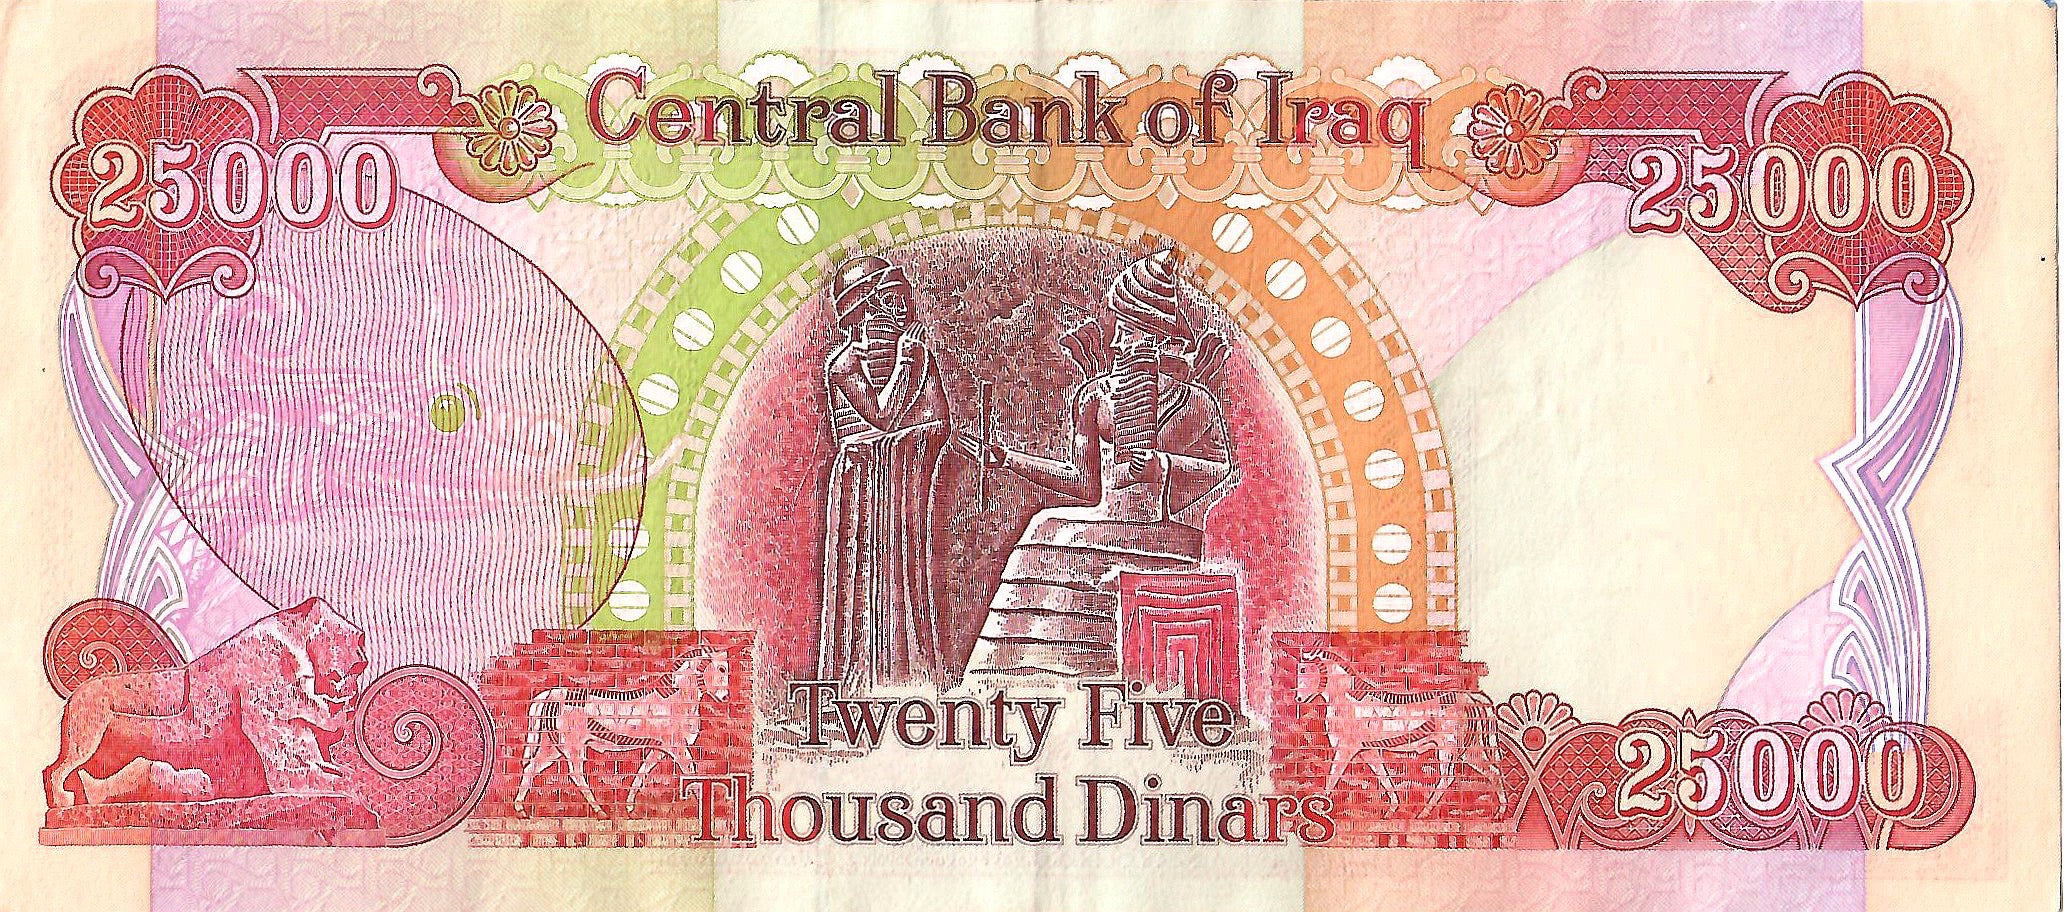 Iraq 25,000 Dinars Banknote, 2006, P-96c, CIR